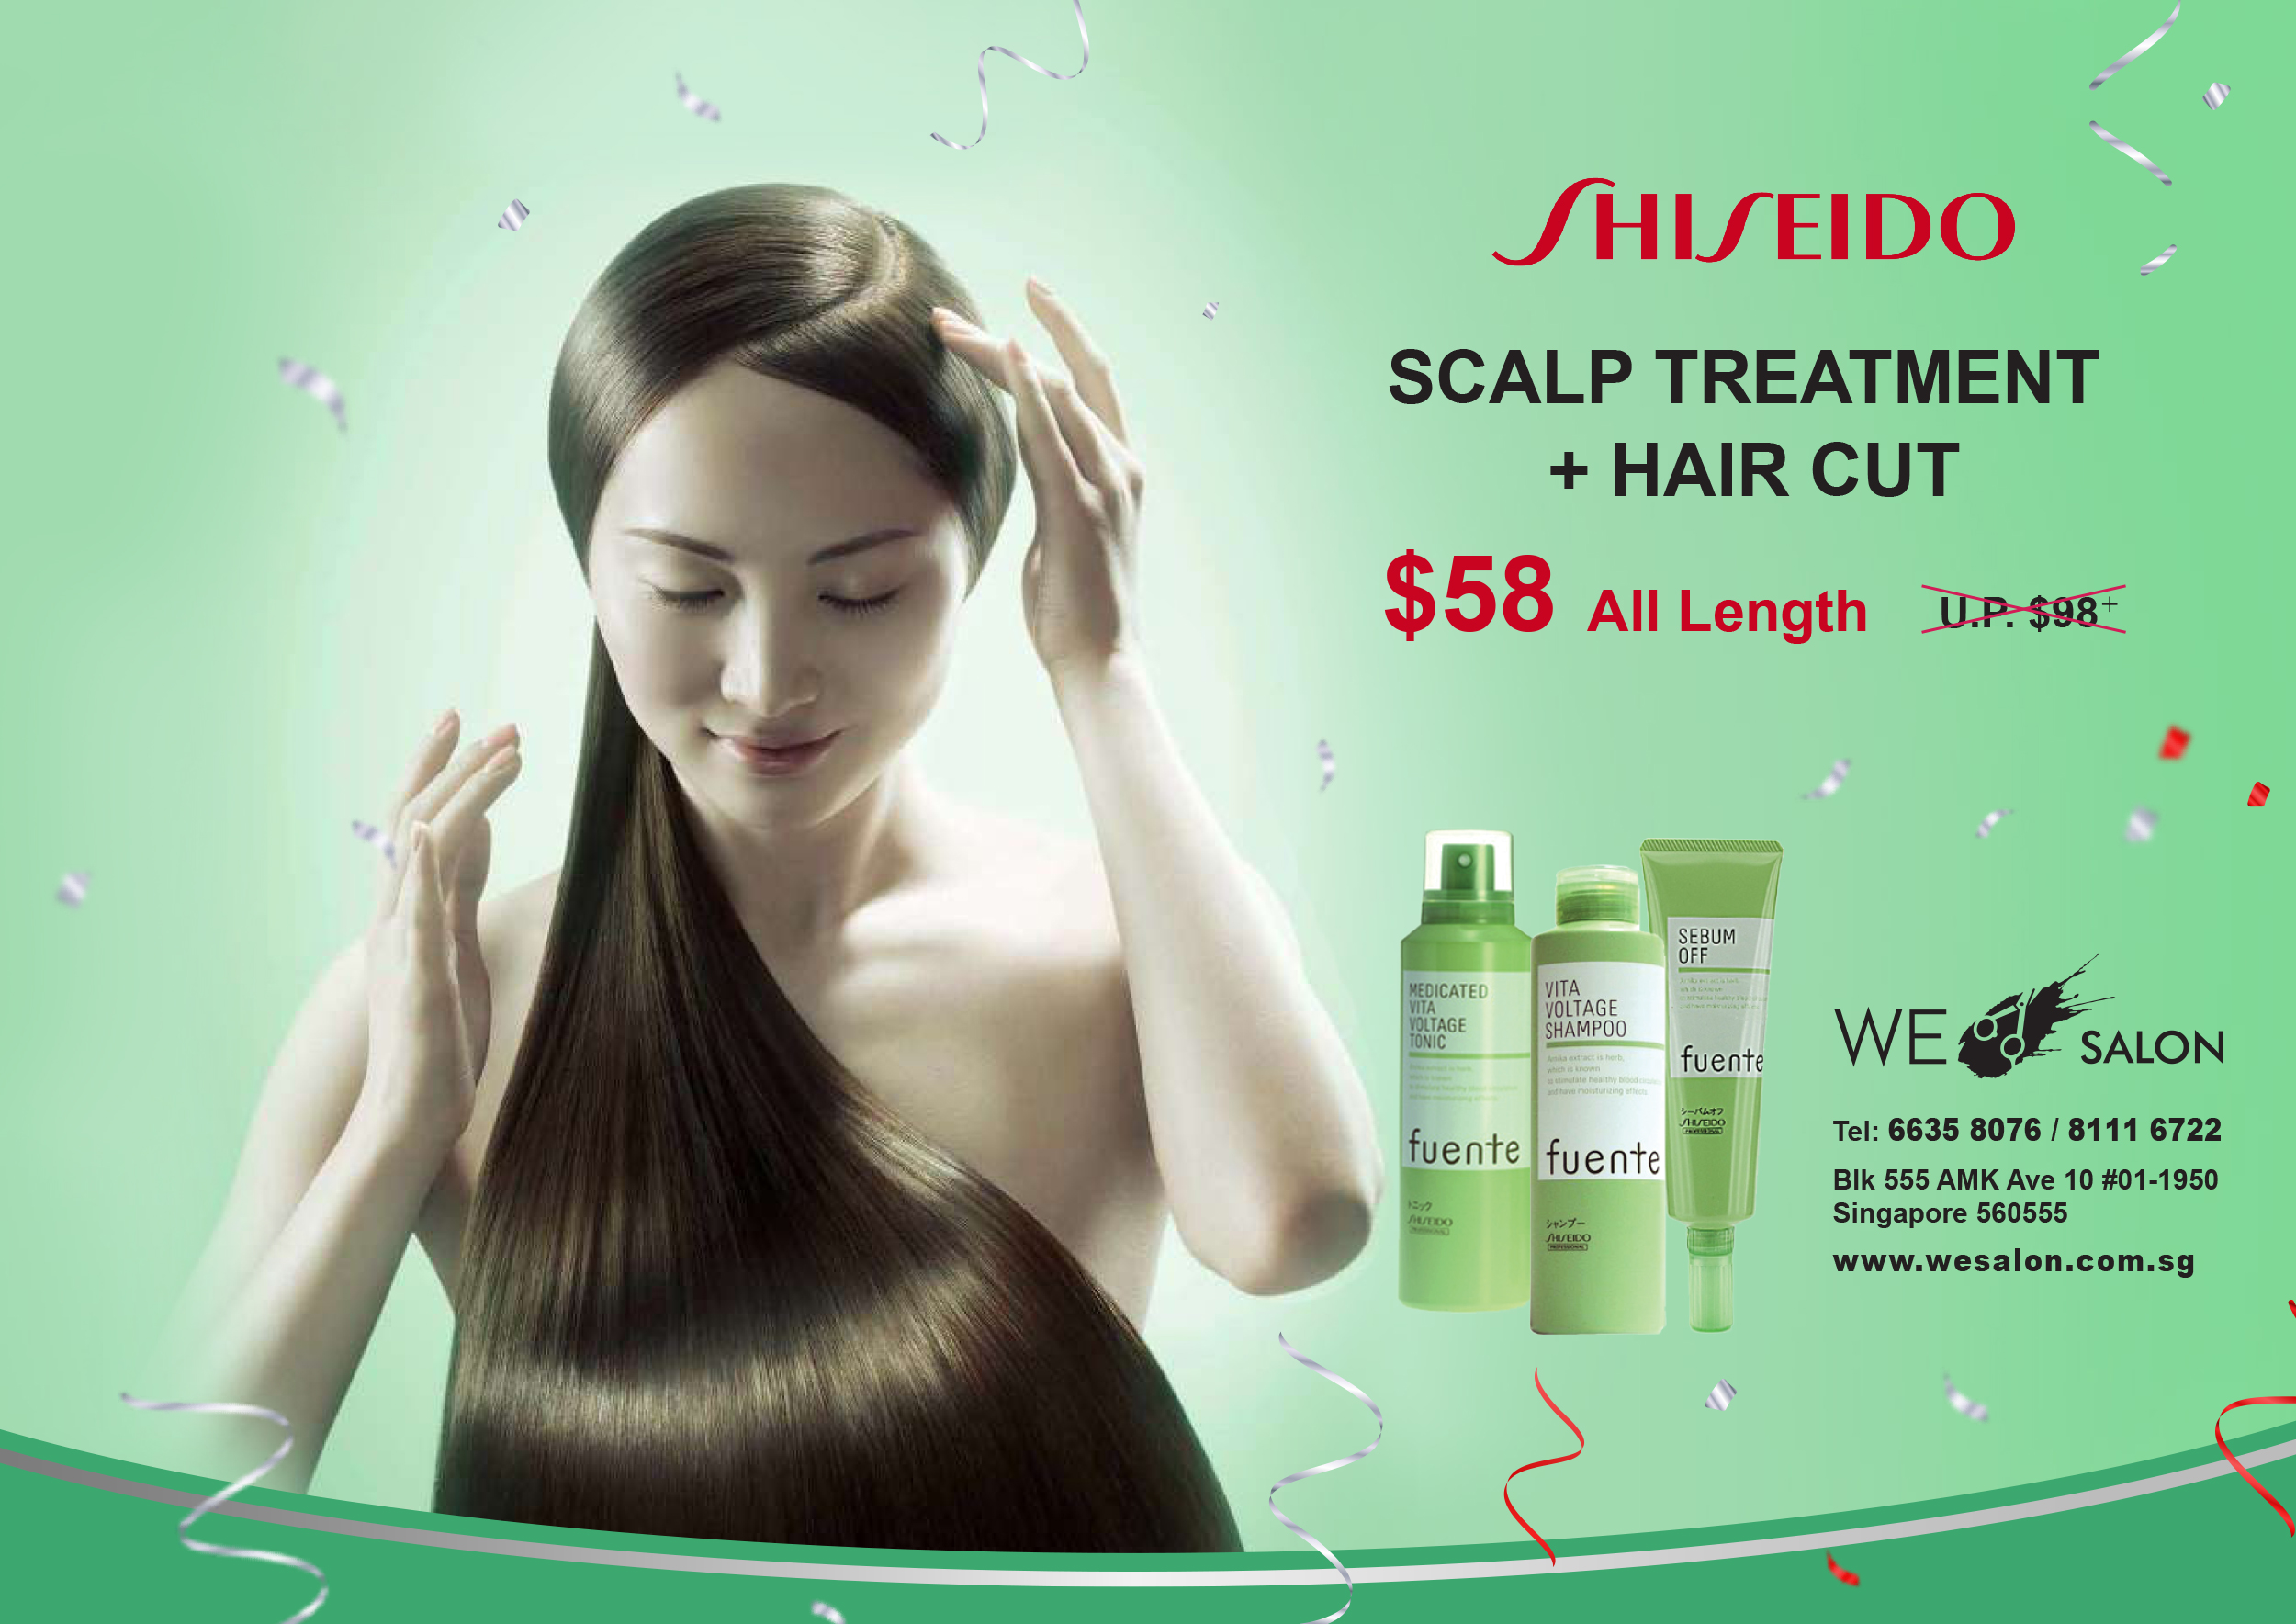 Shiseido-Scalp-Treatment = $58